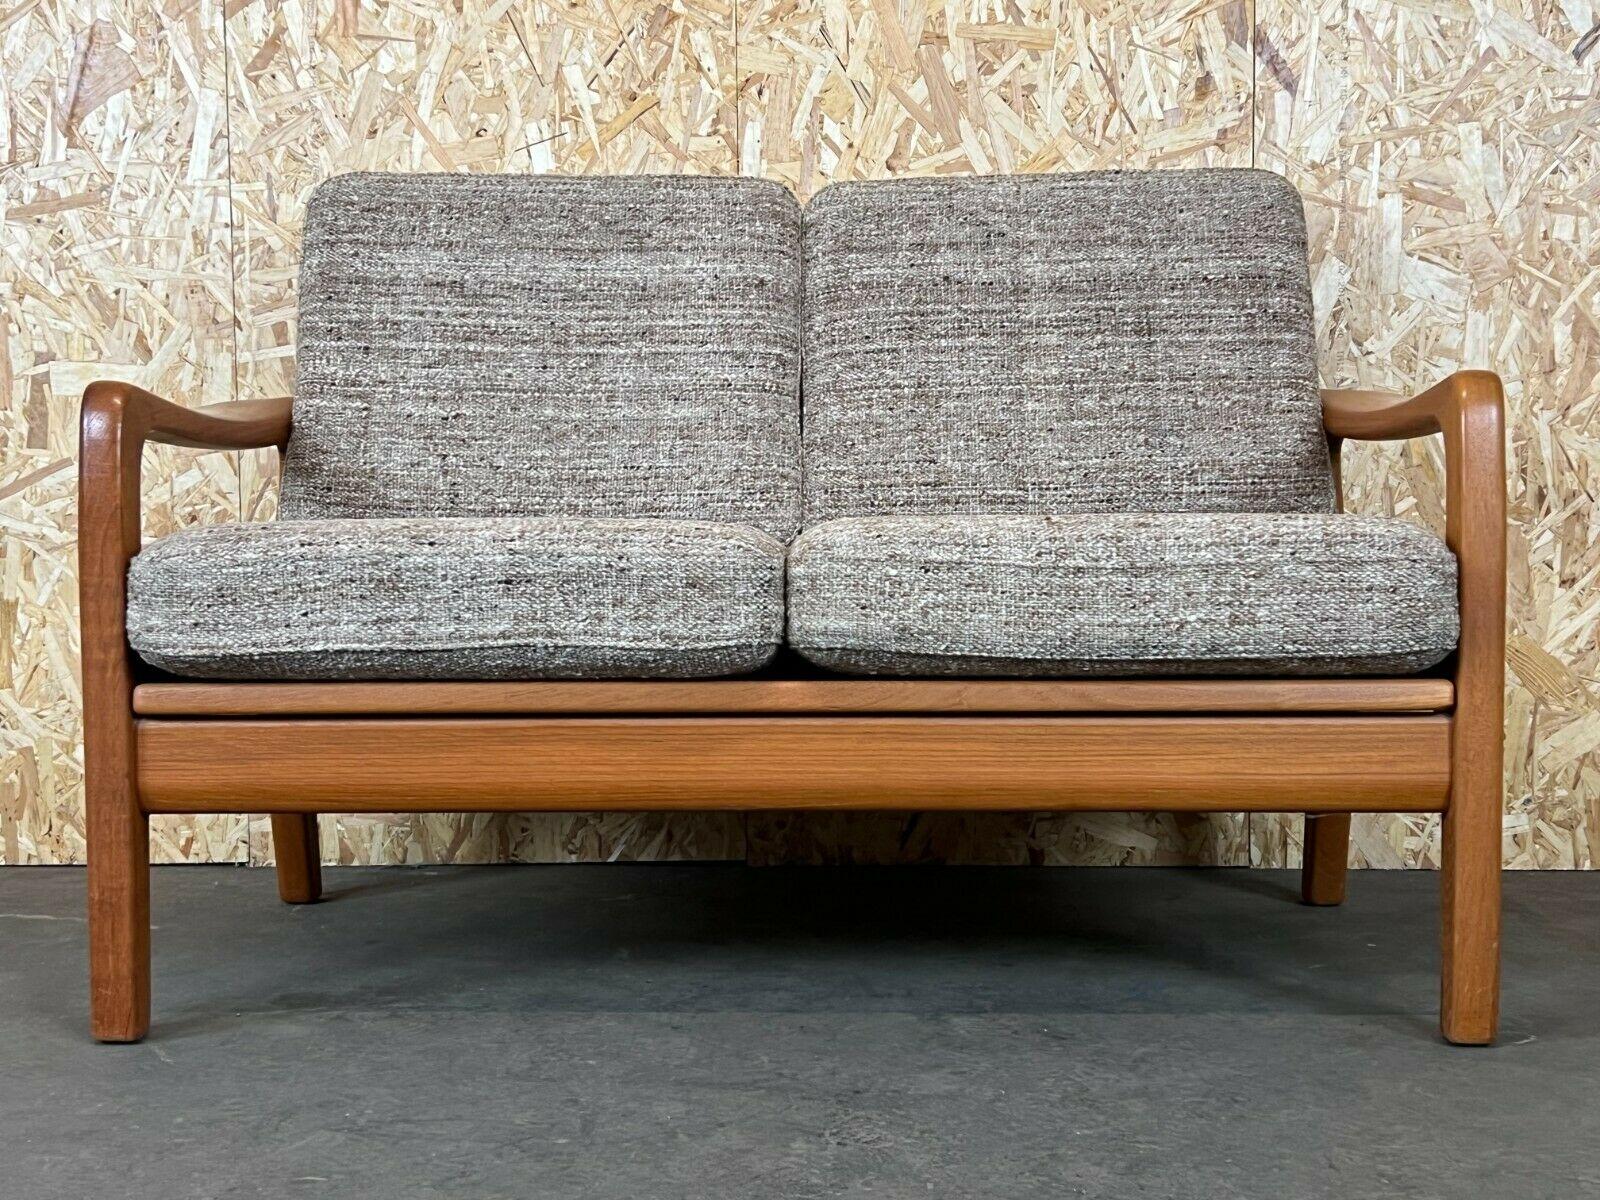 60s 70s teak sofa 2 seater couch J. Kristensen Danish Denmark Design 60s 70s

Object: sofa

Manufacturer: Juul Kristensen

Condition: good - vintage

Age: around 1960-1970

Dimensions:

131.5cm x 81cm x 82cm
Seat height = 44cm

Other